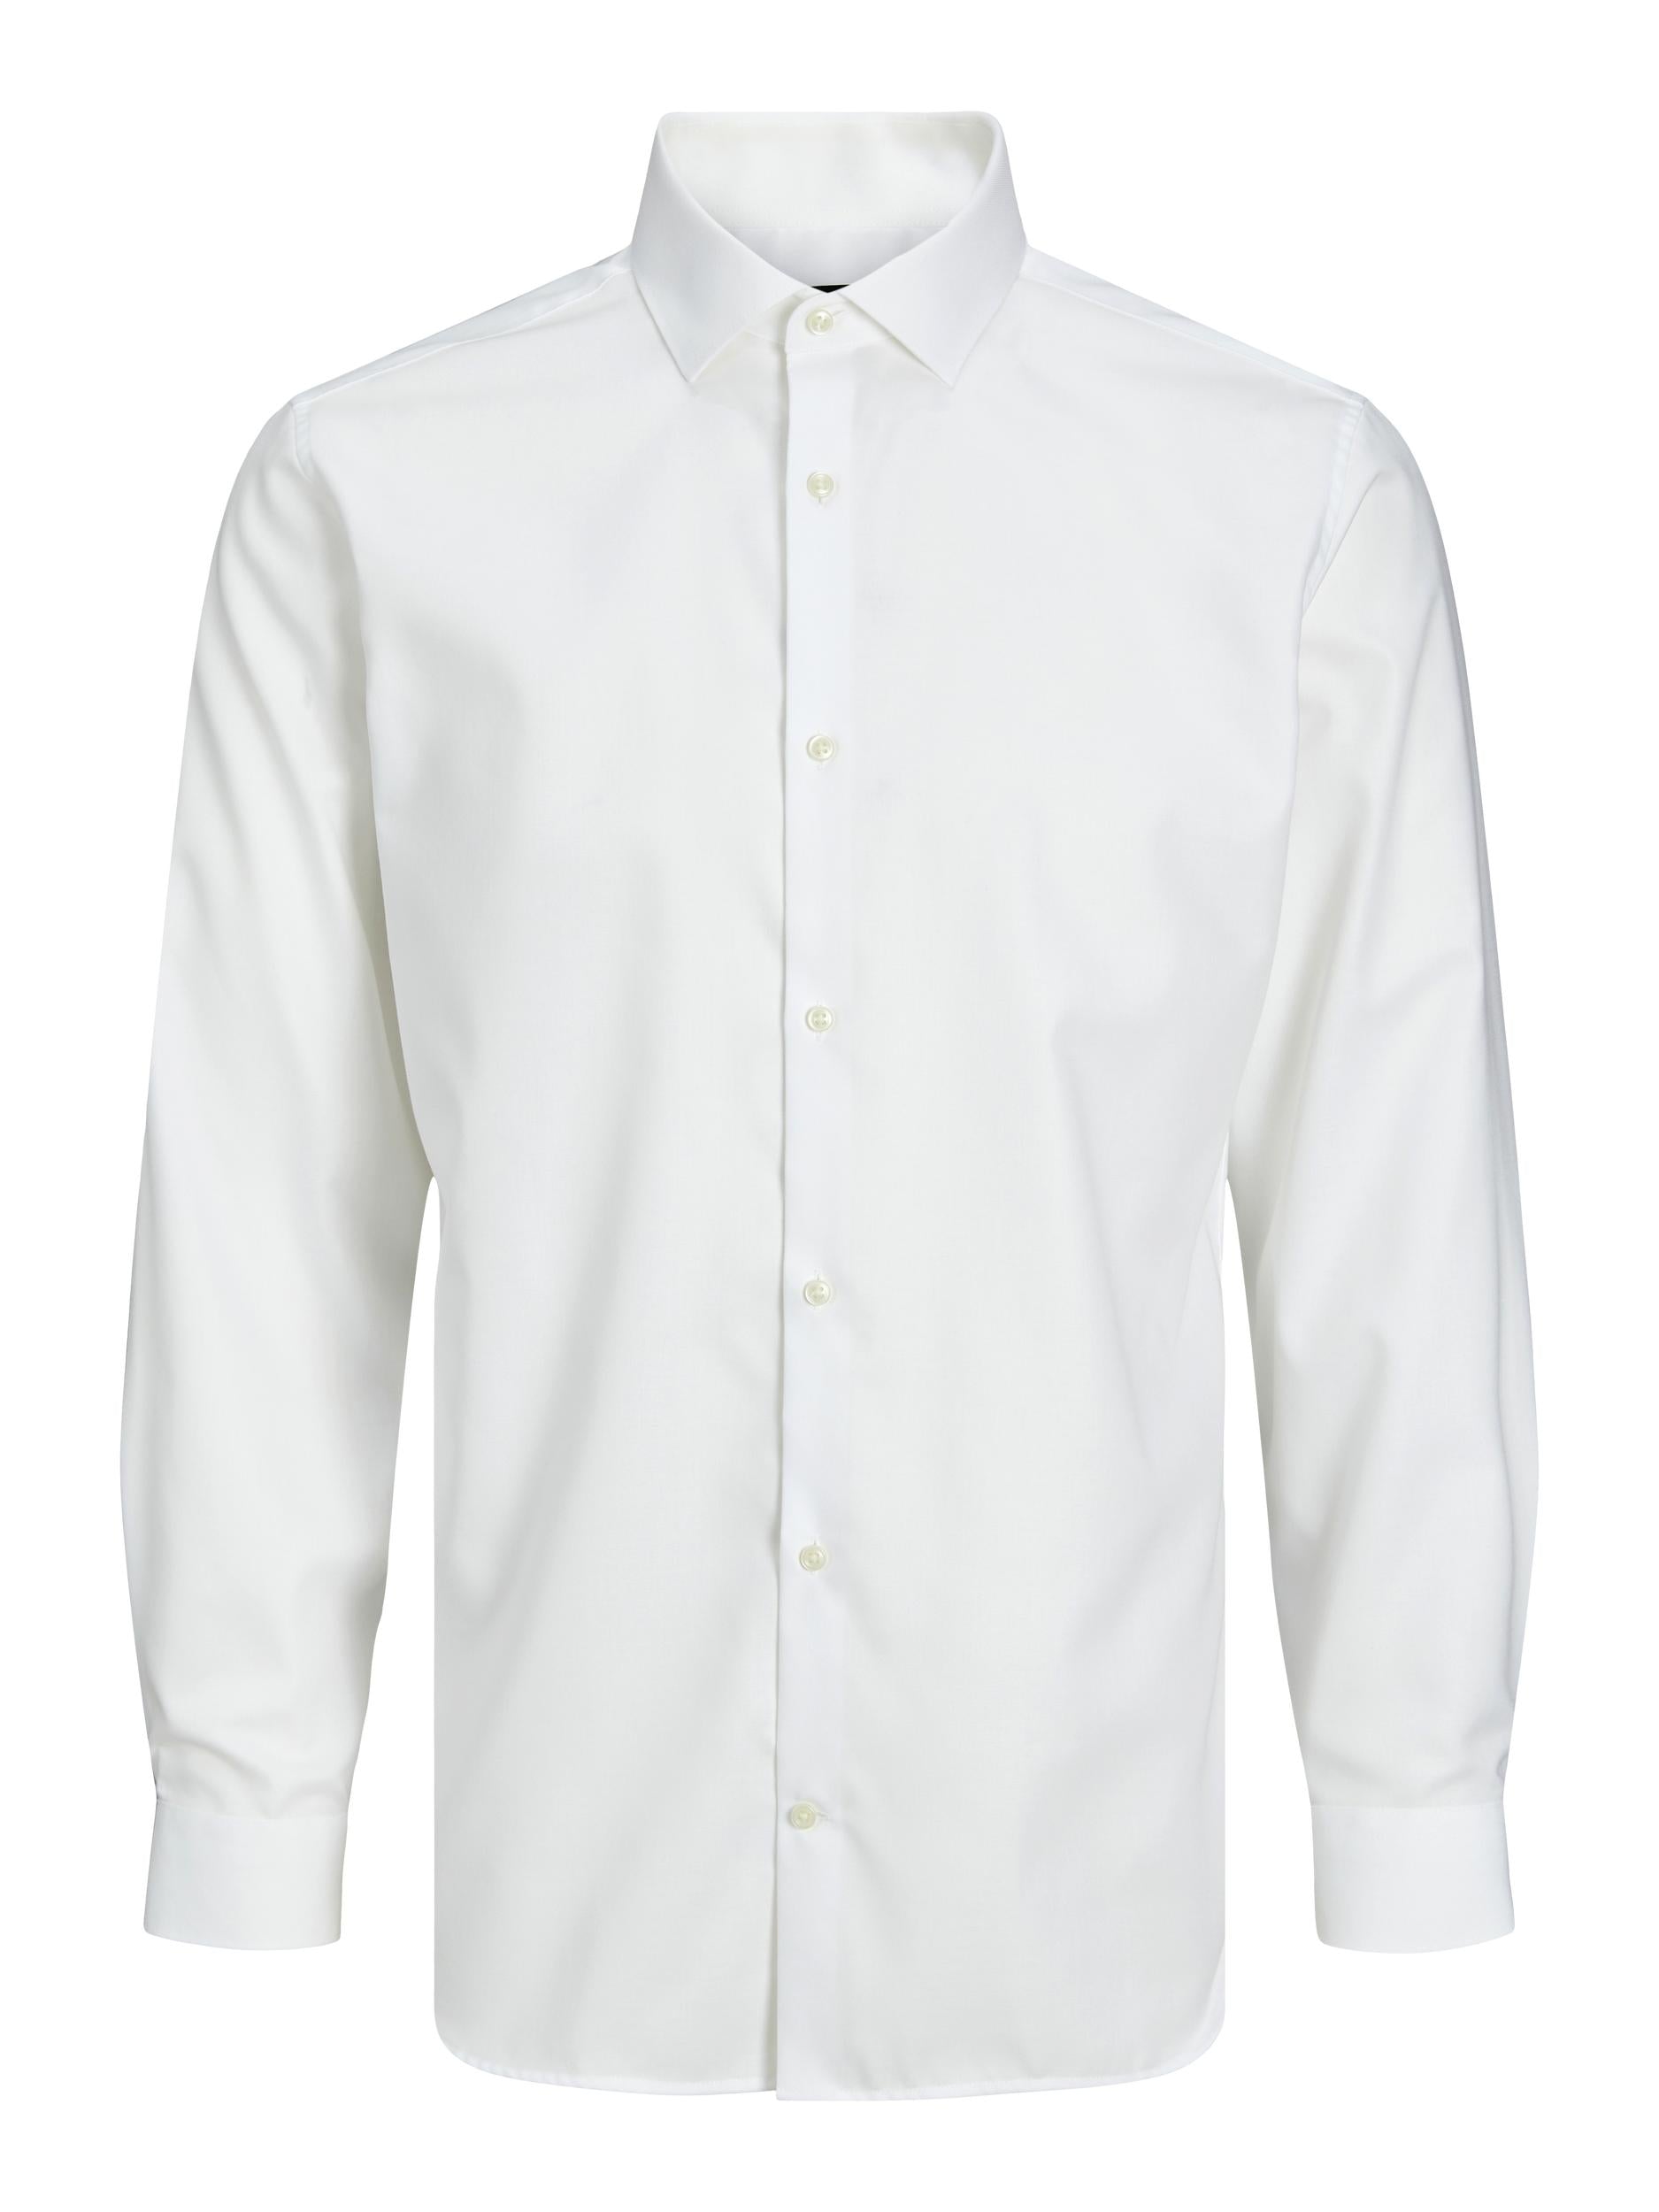 Parker White Shirt